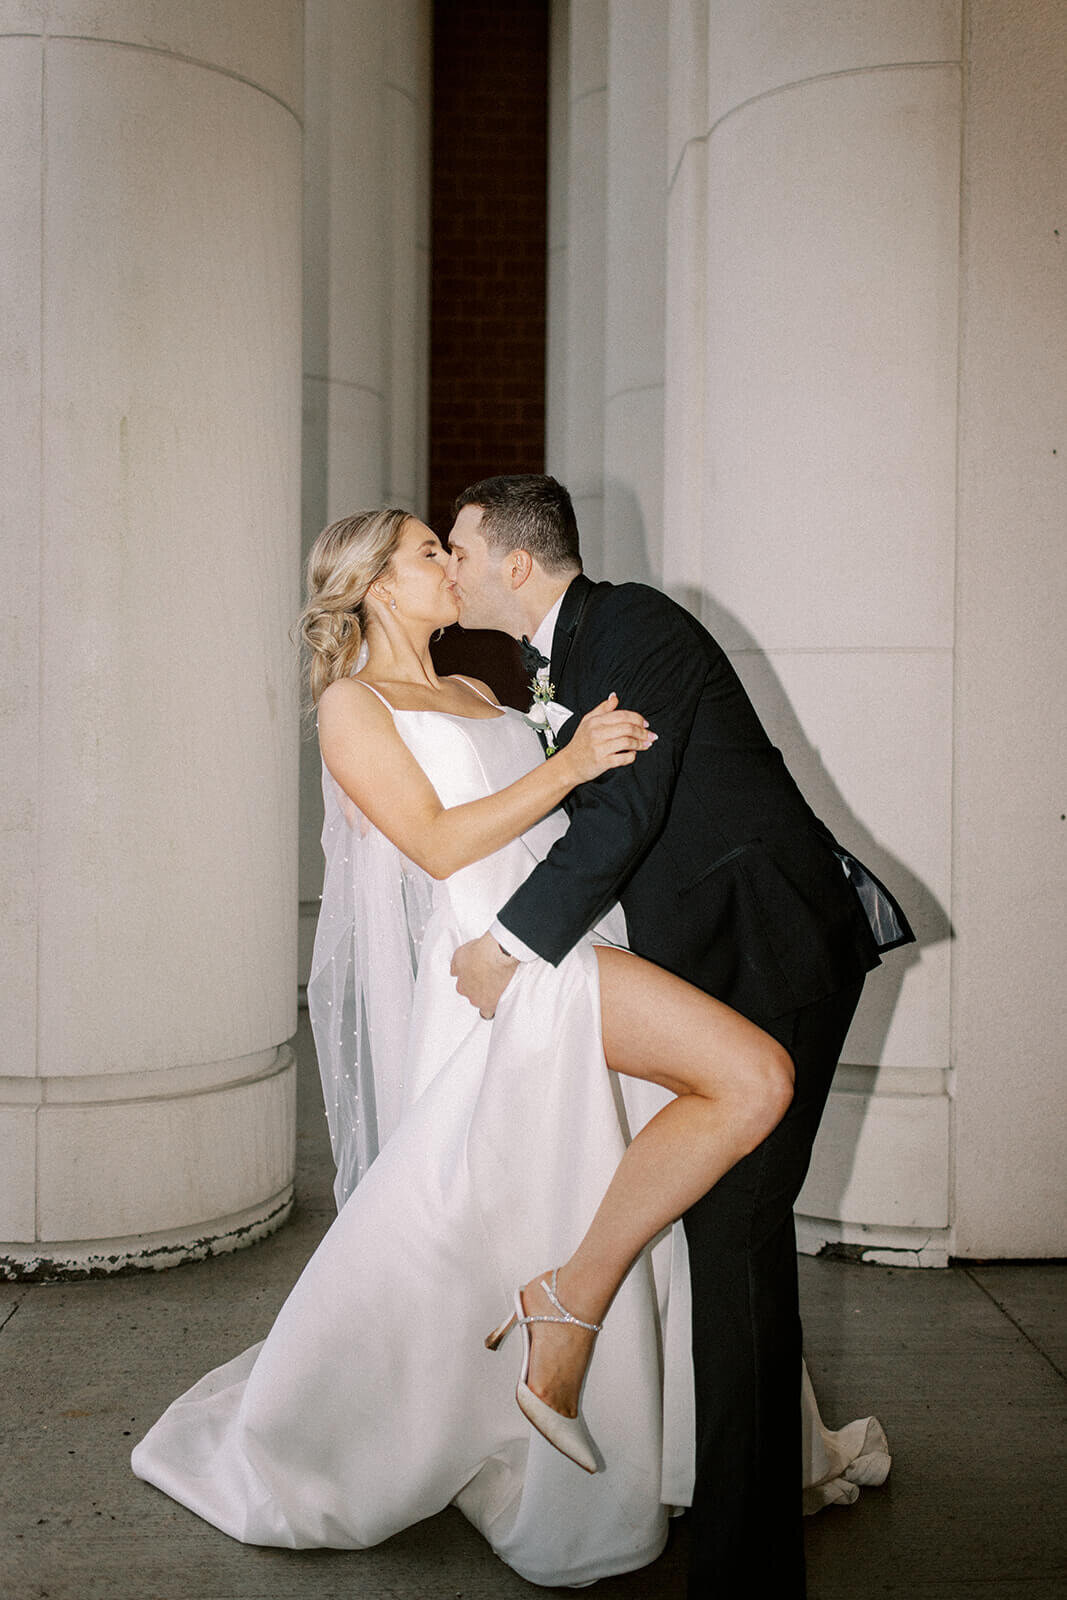 wedding-day-bride-and-groom-kiss-portrait-Alyssa-Marie-Photography